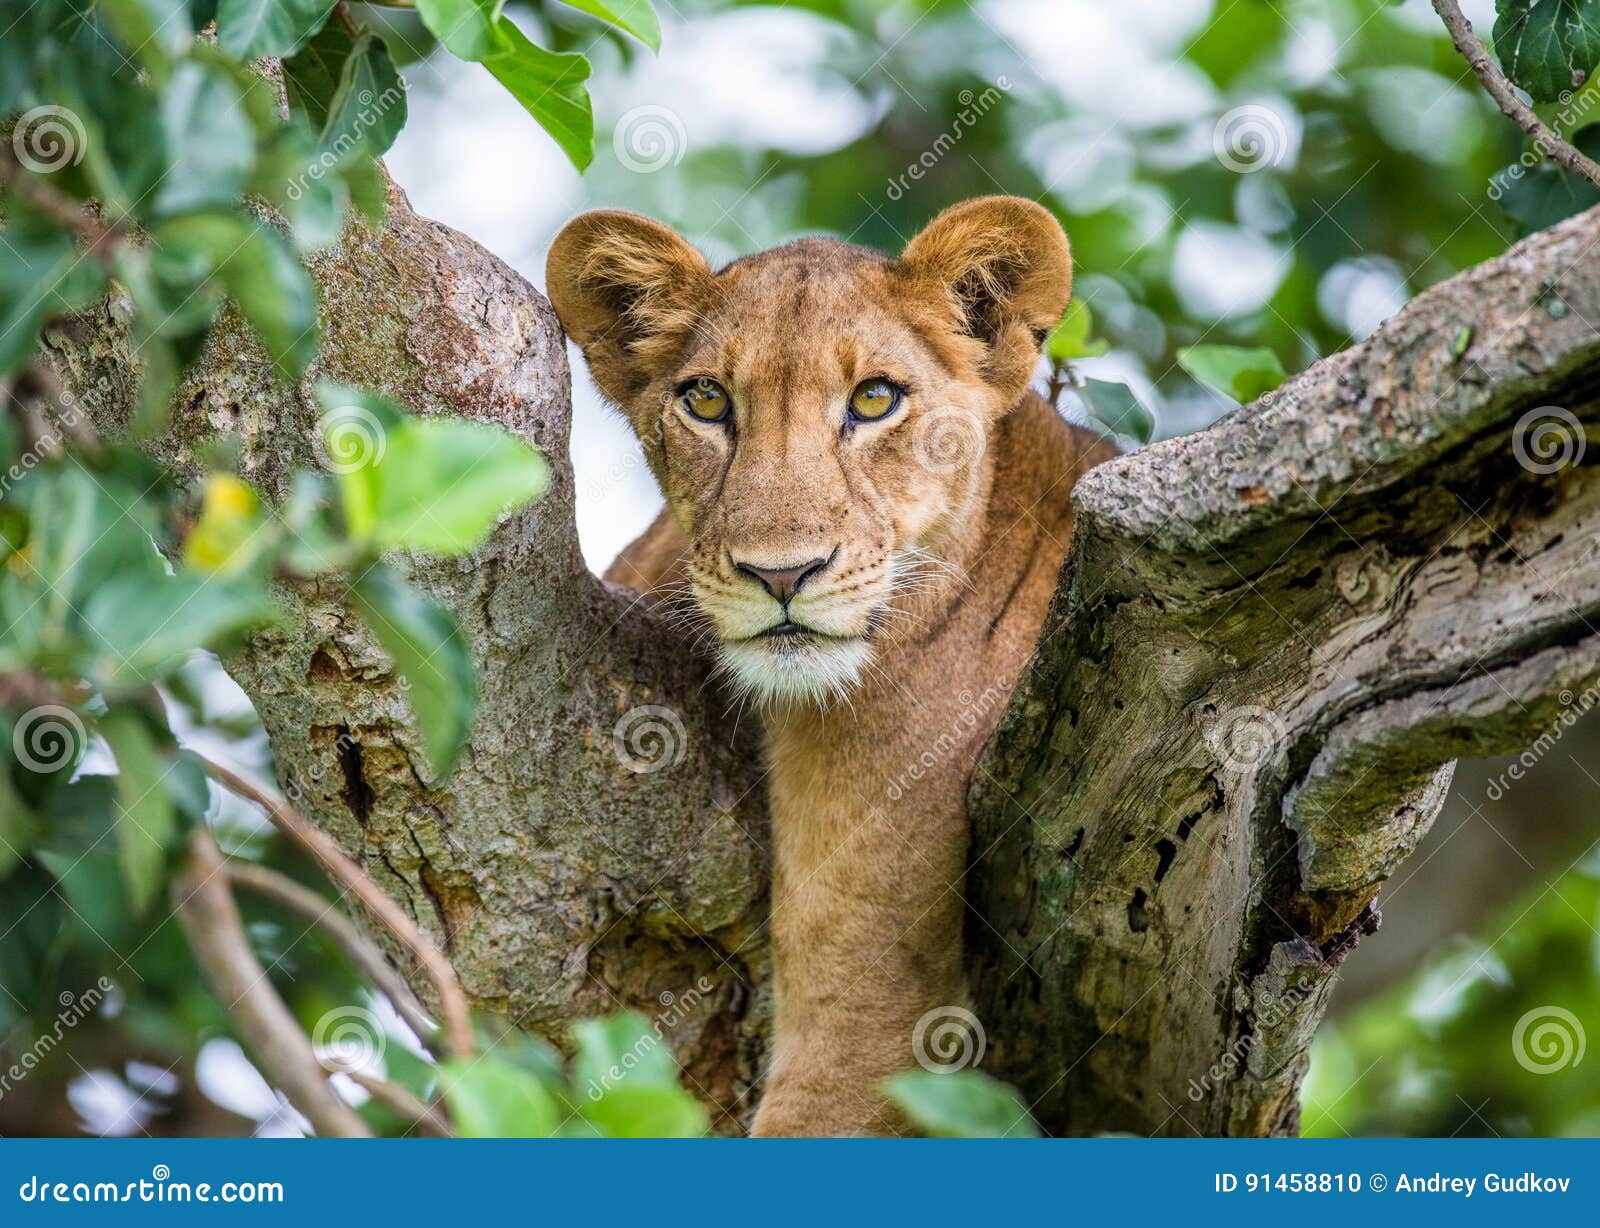 lioness lying on a big tree. close-up. uganda. east africa.